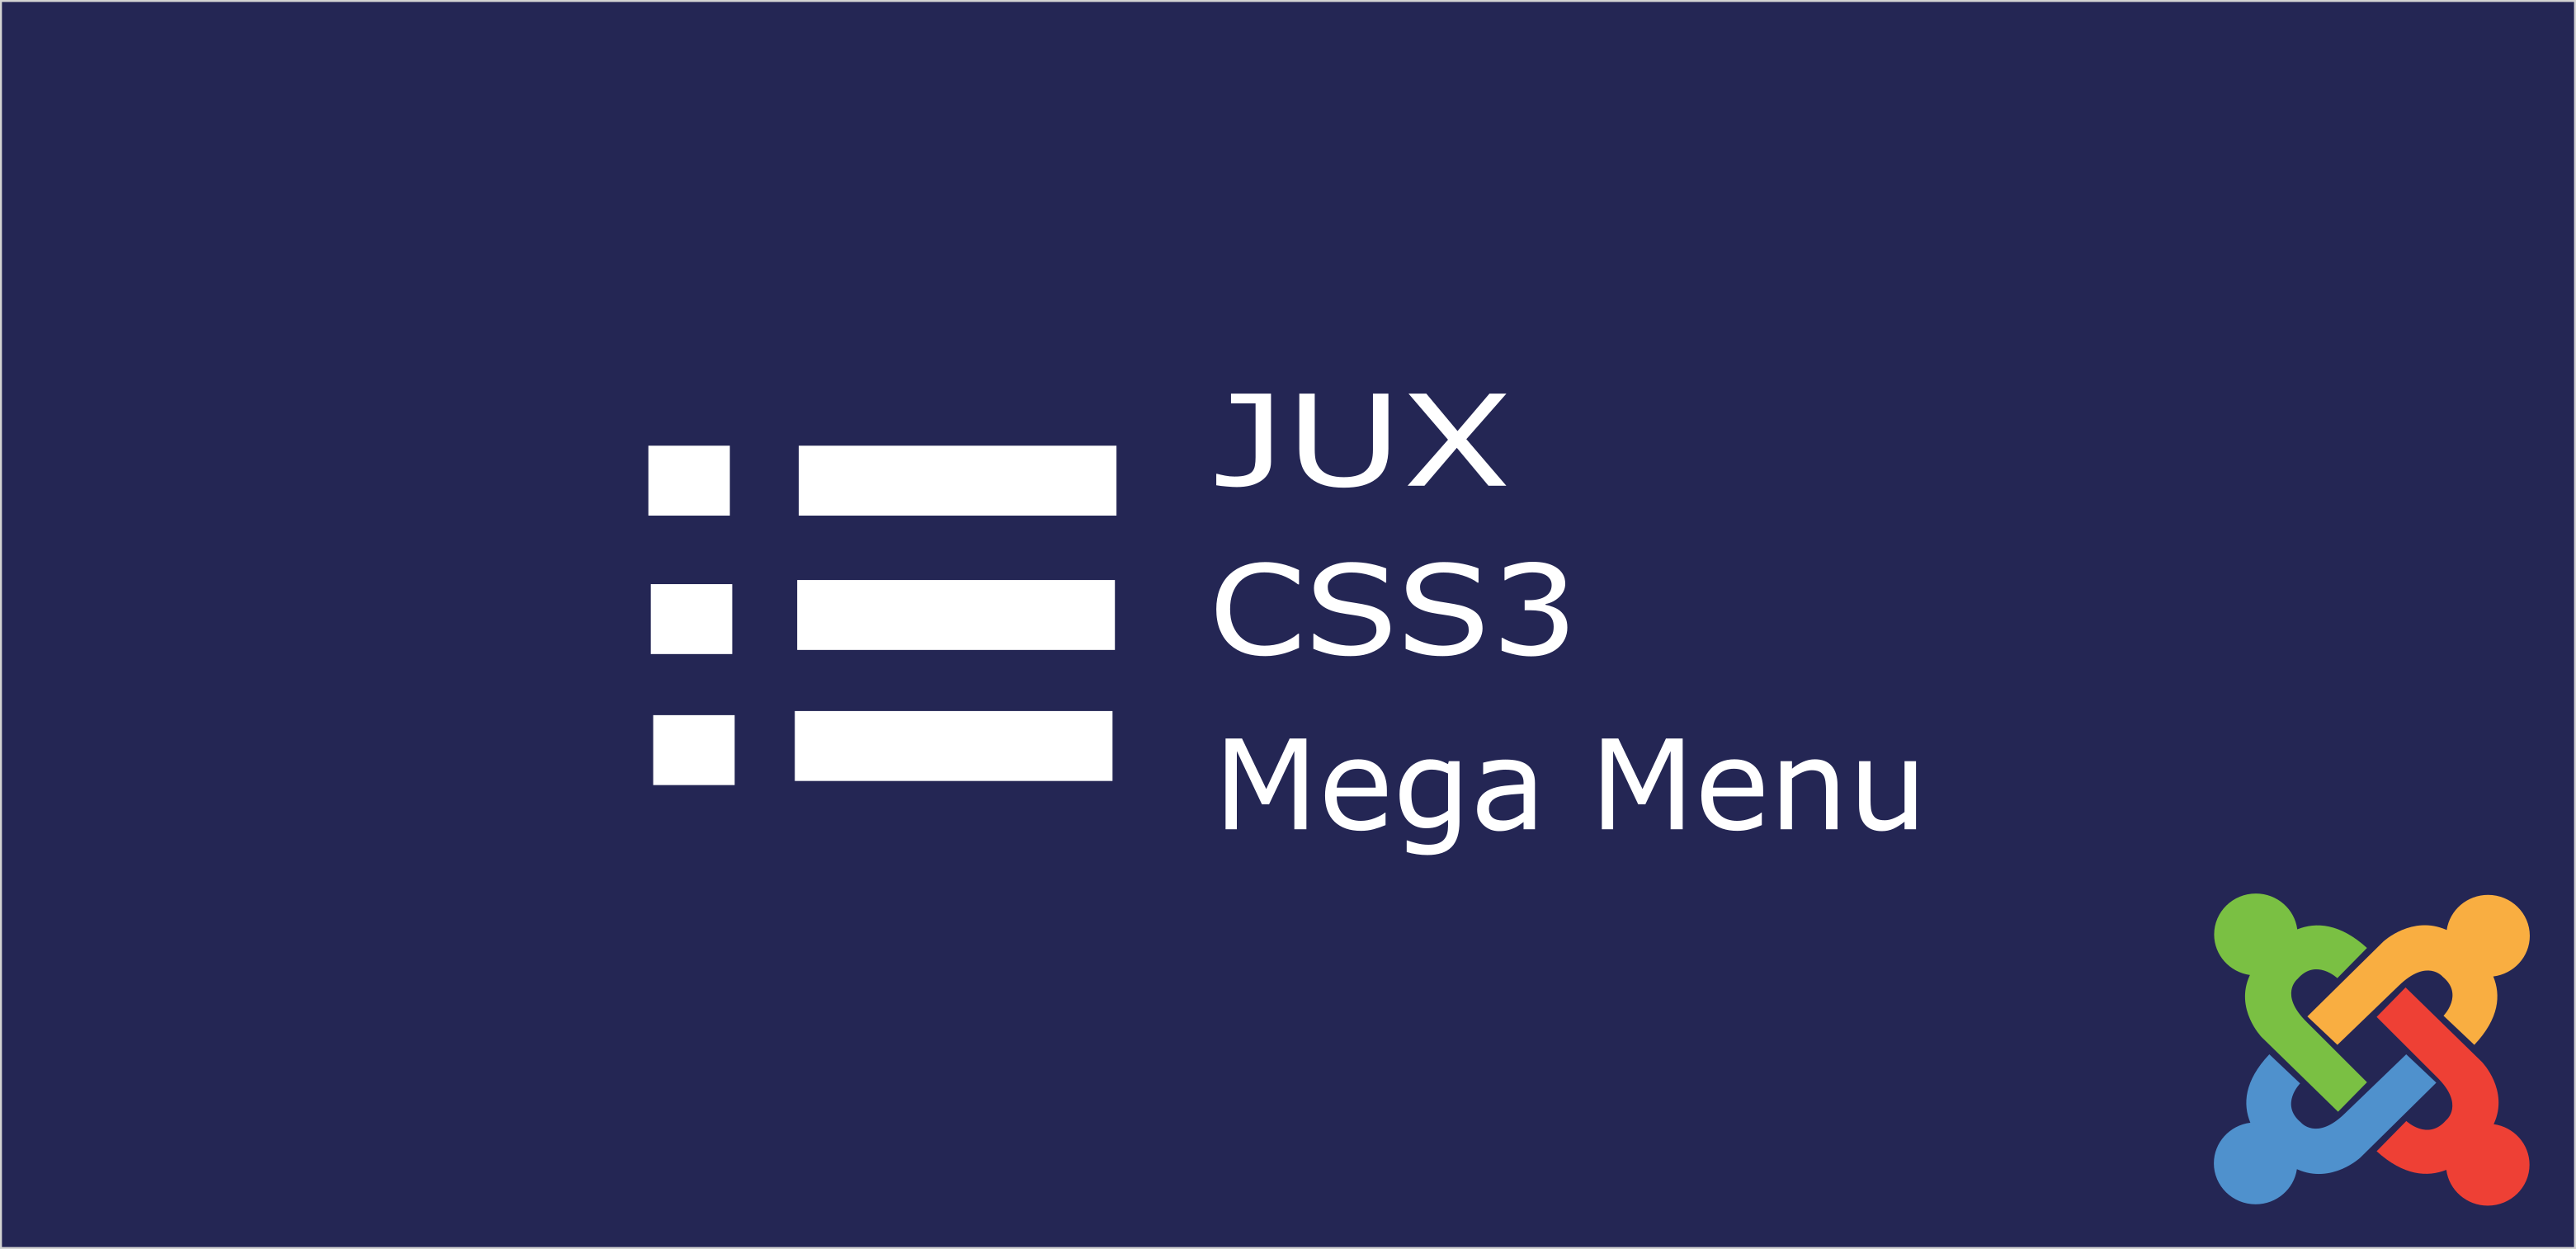 jux Css3 mega menu